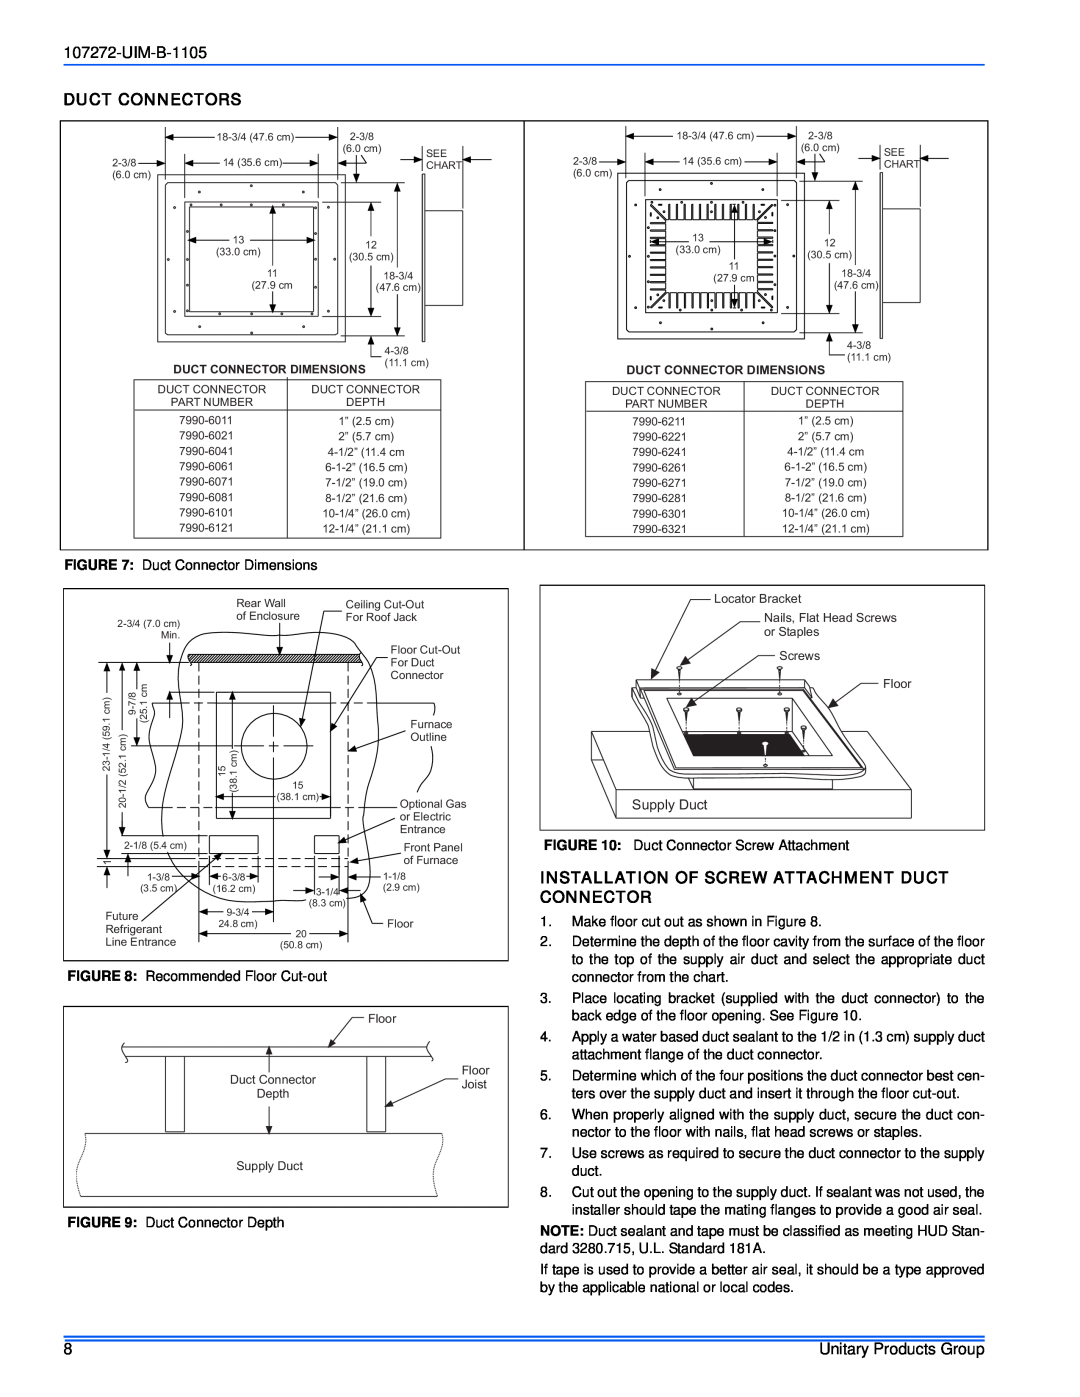 York DFAH, DFAA installation manual Duct Connectors, Installation Of Screw Attachment Duct Connector, UIM-B-1105 